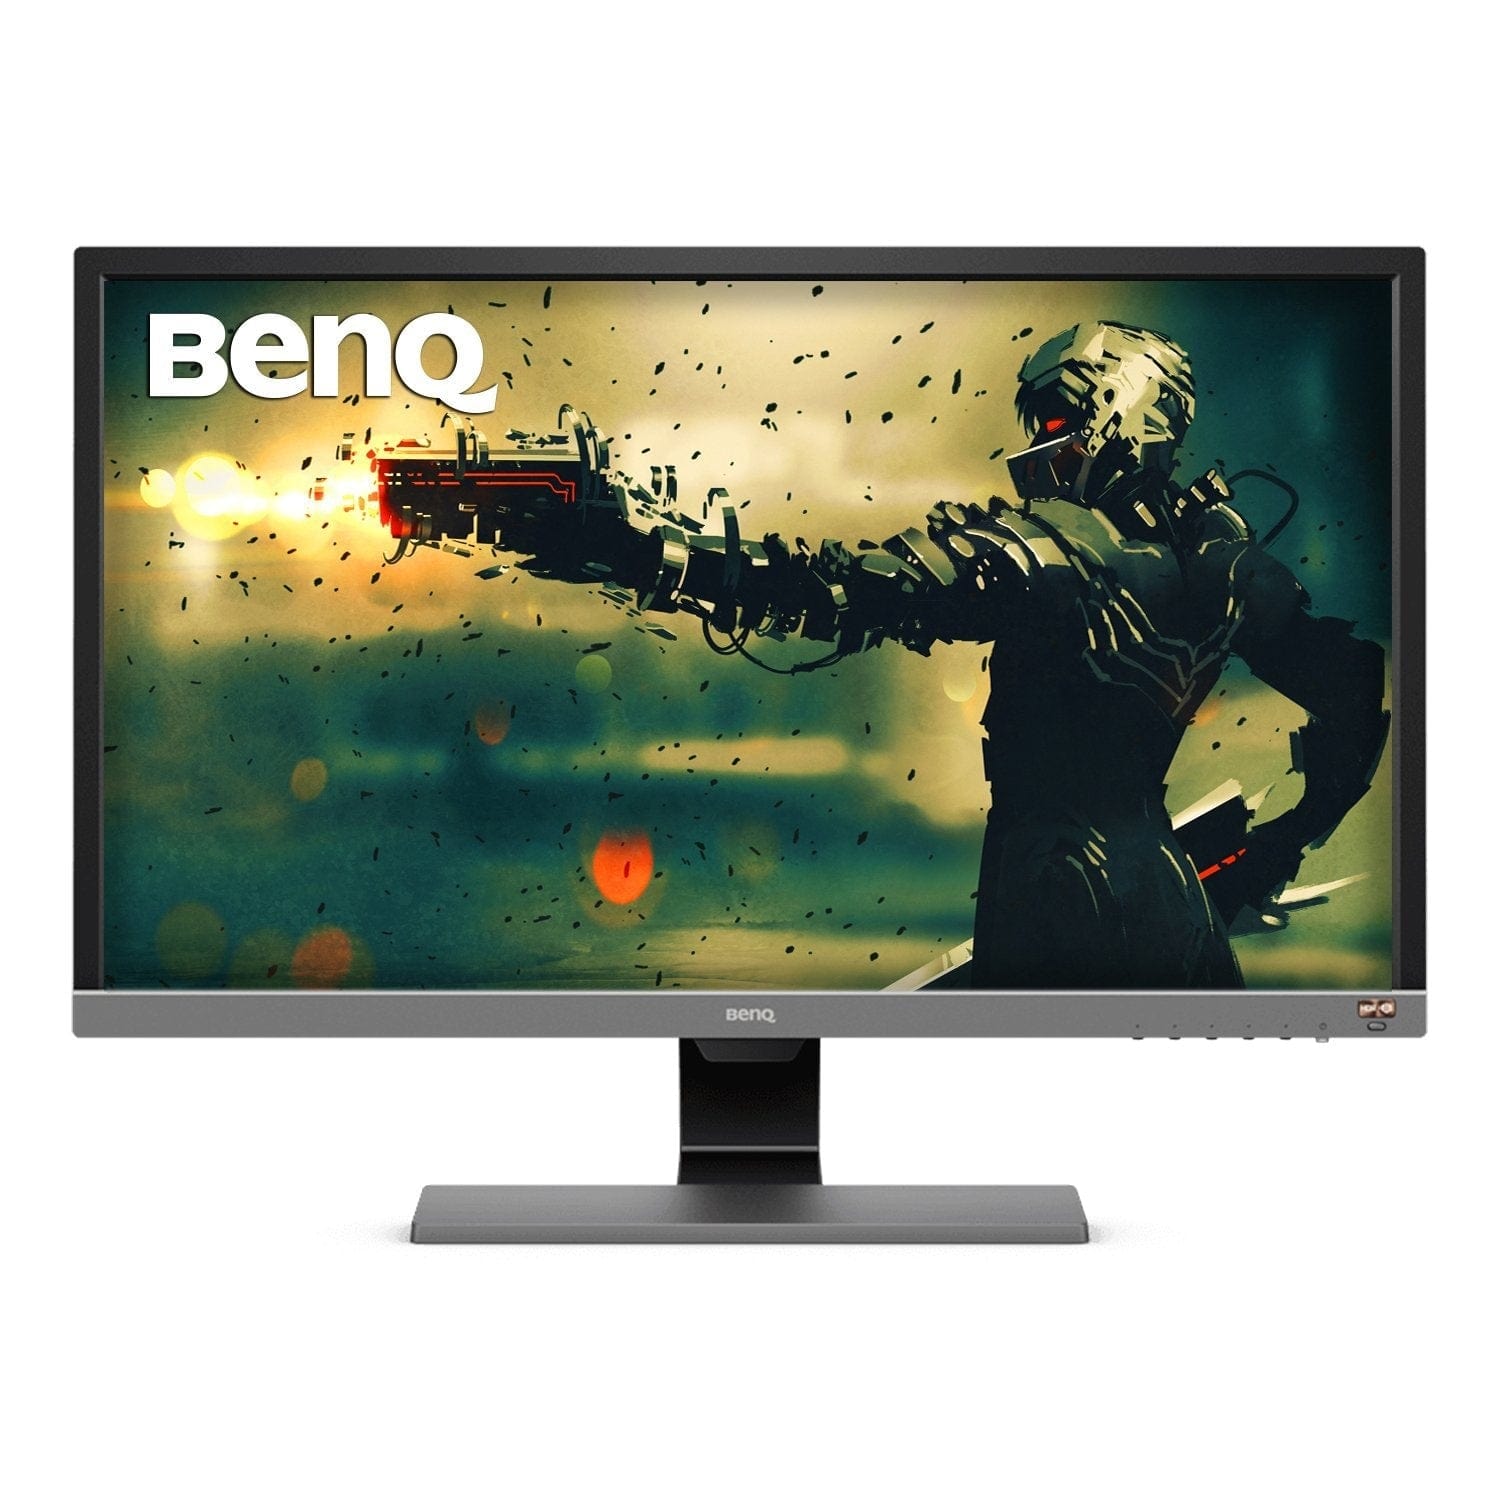 BENQ Computer Monitors B079HV1TDC